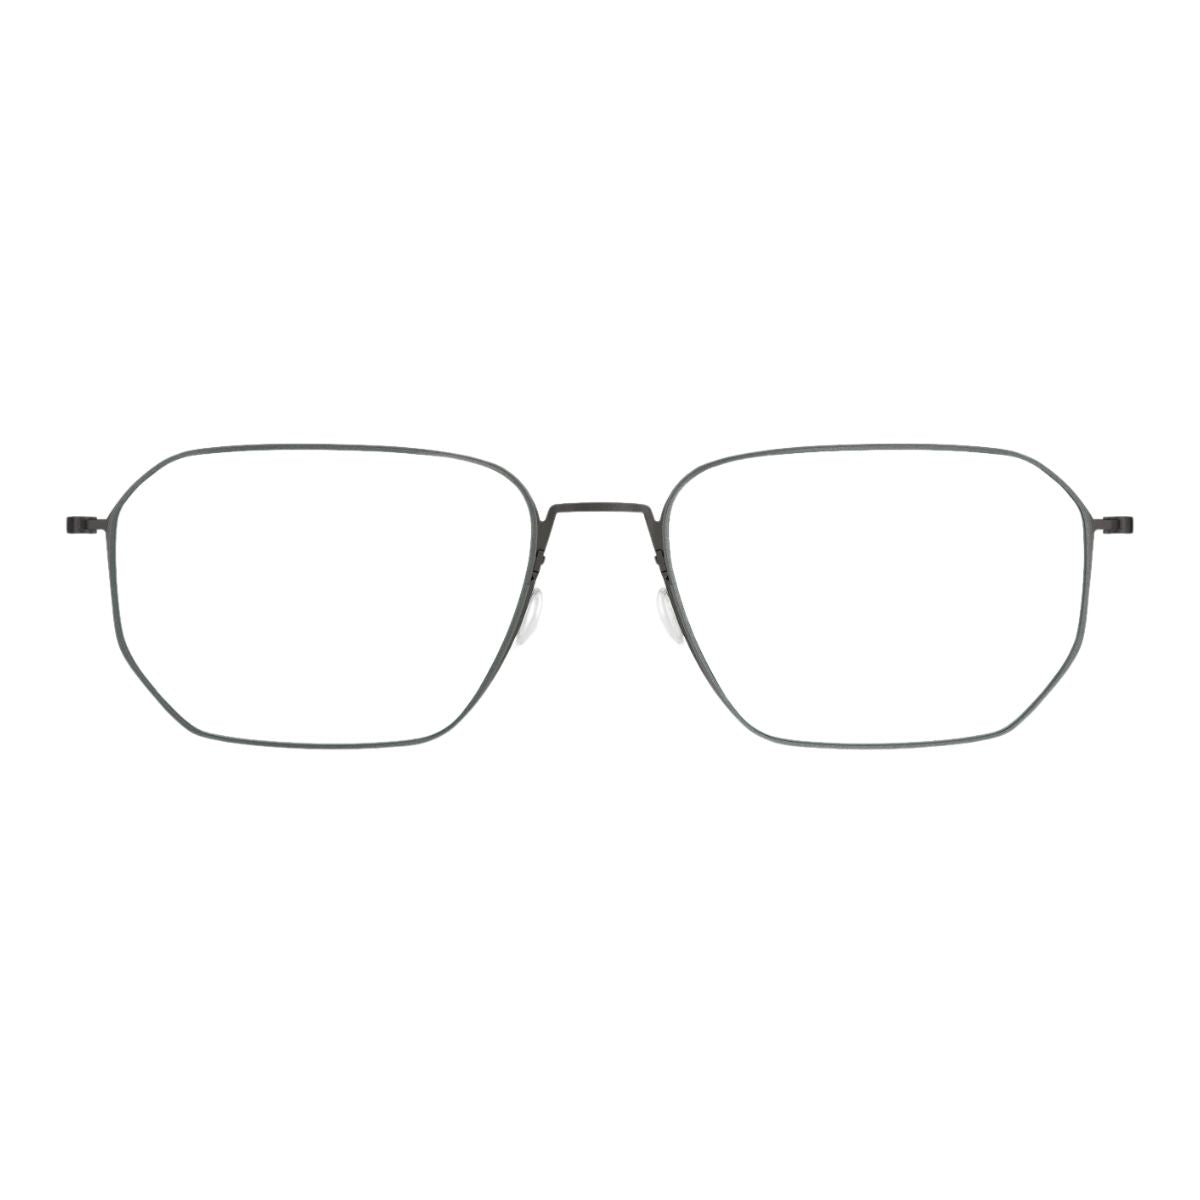 "Shop Stylish Lindberg Rectangle Shape Optical Glasses Fro Men & Women At optorium"